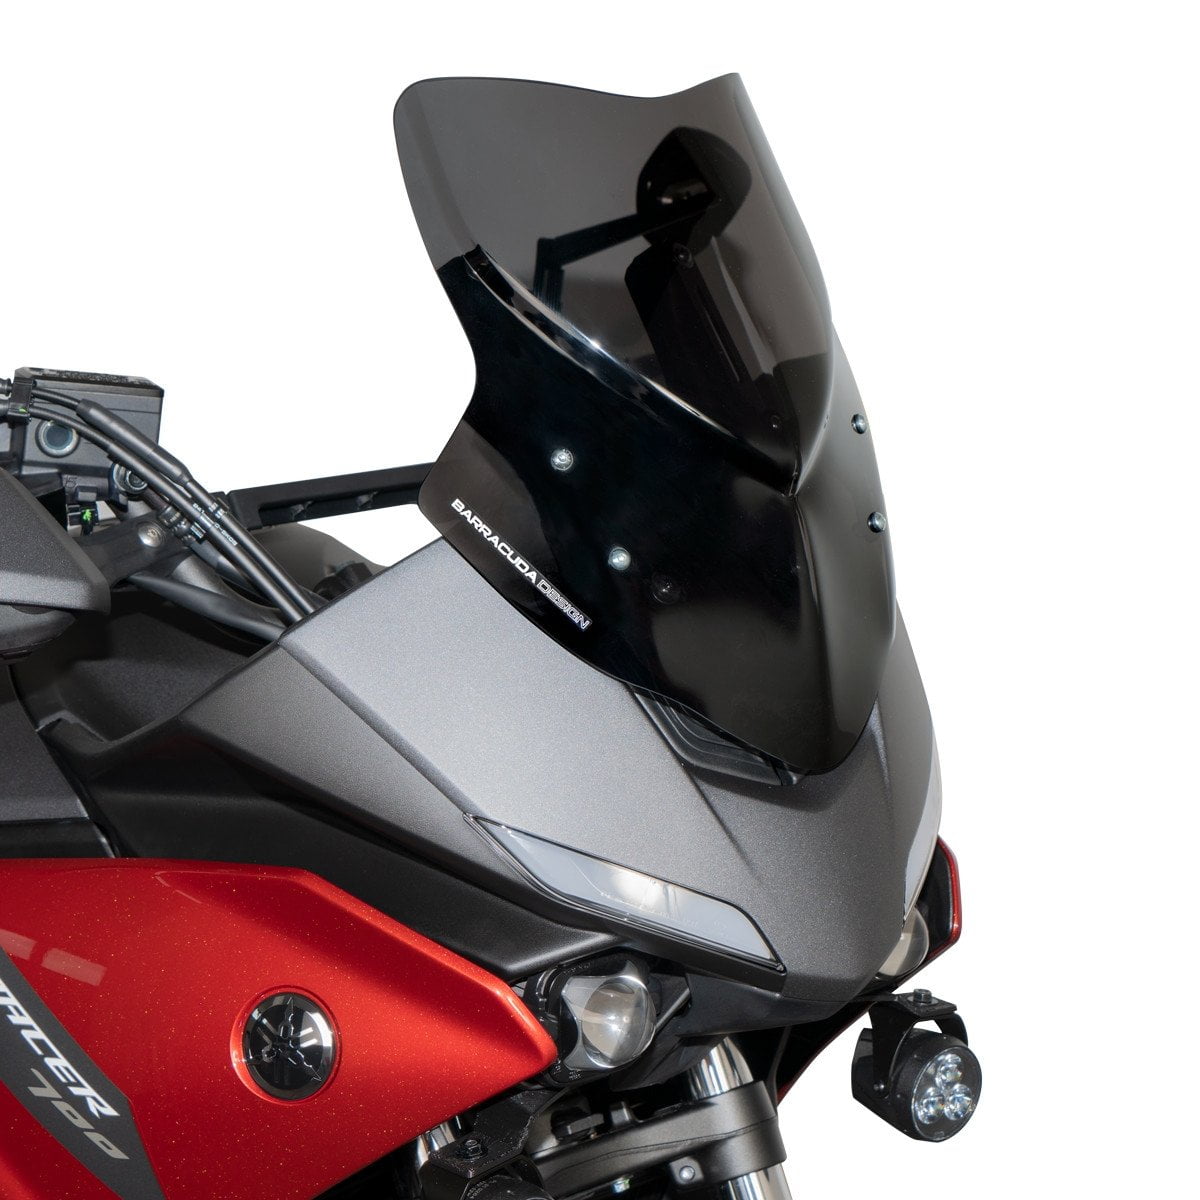 moto YAMAHA Tracer 700 - modèle 2020